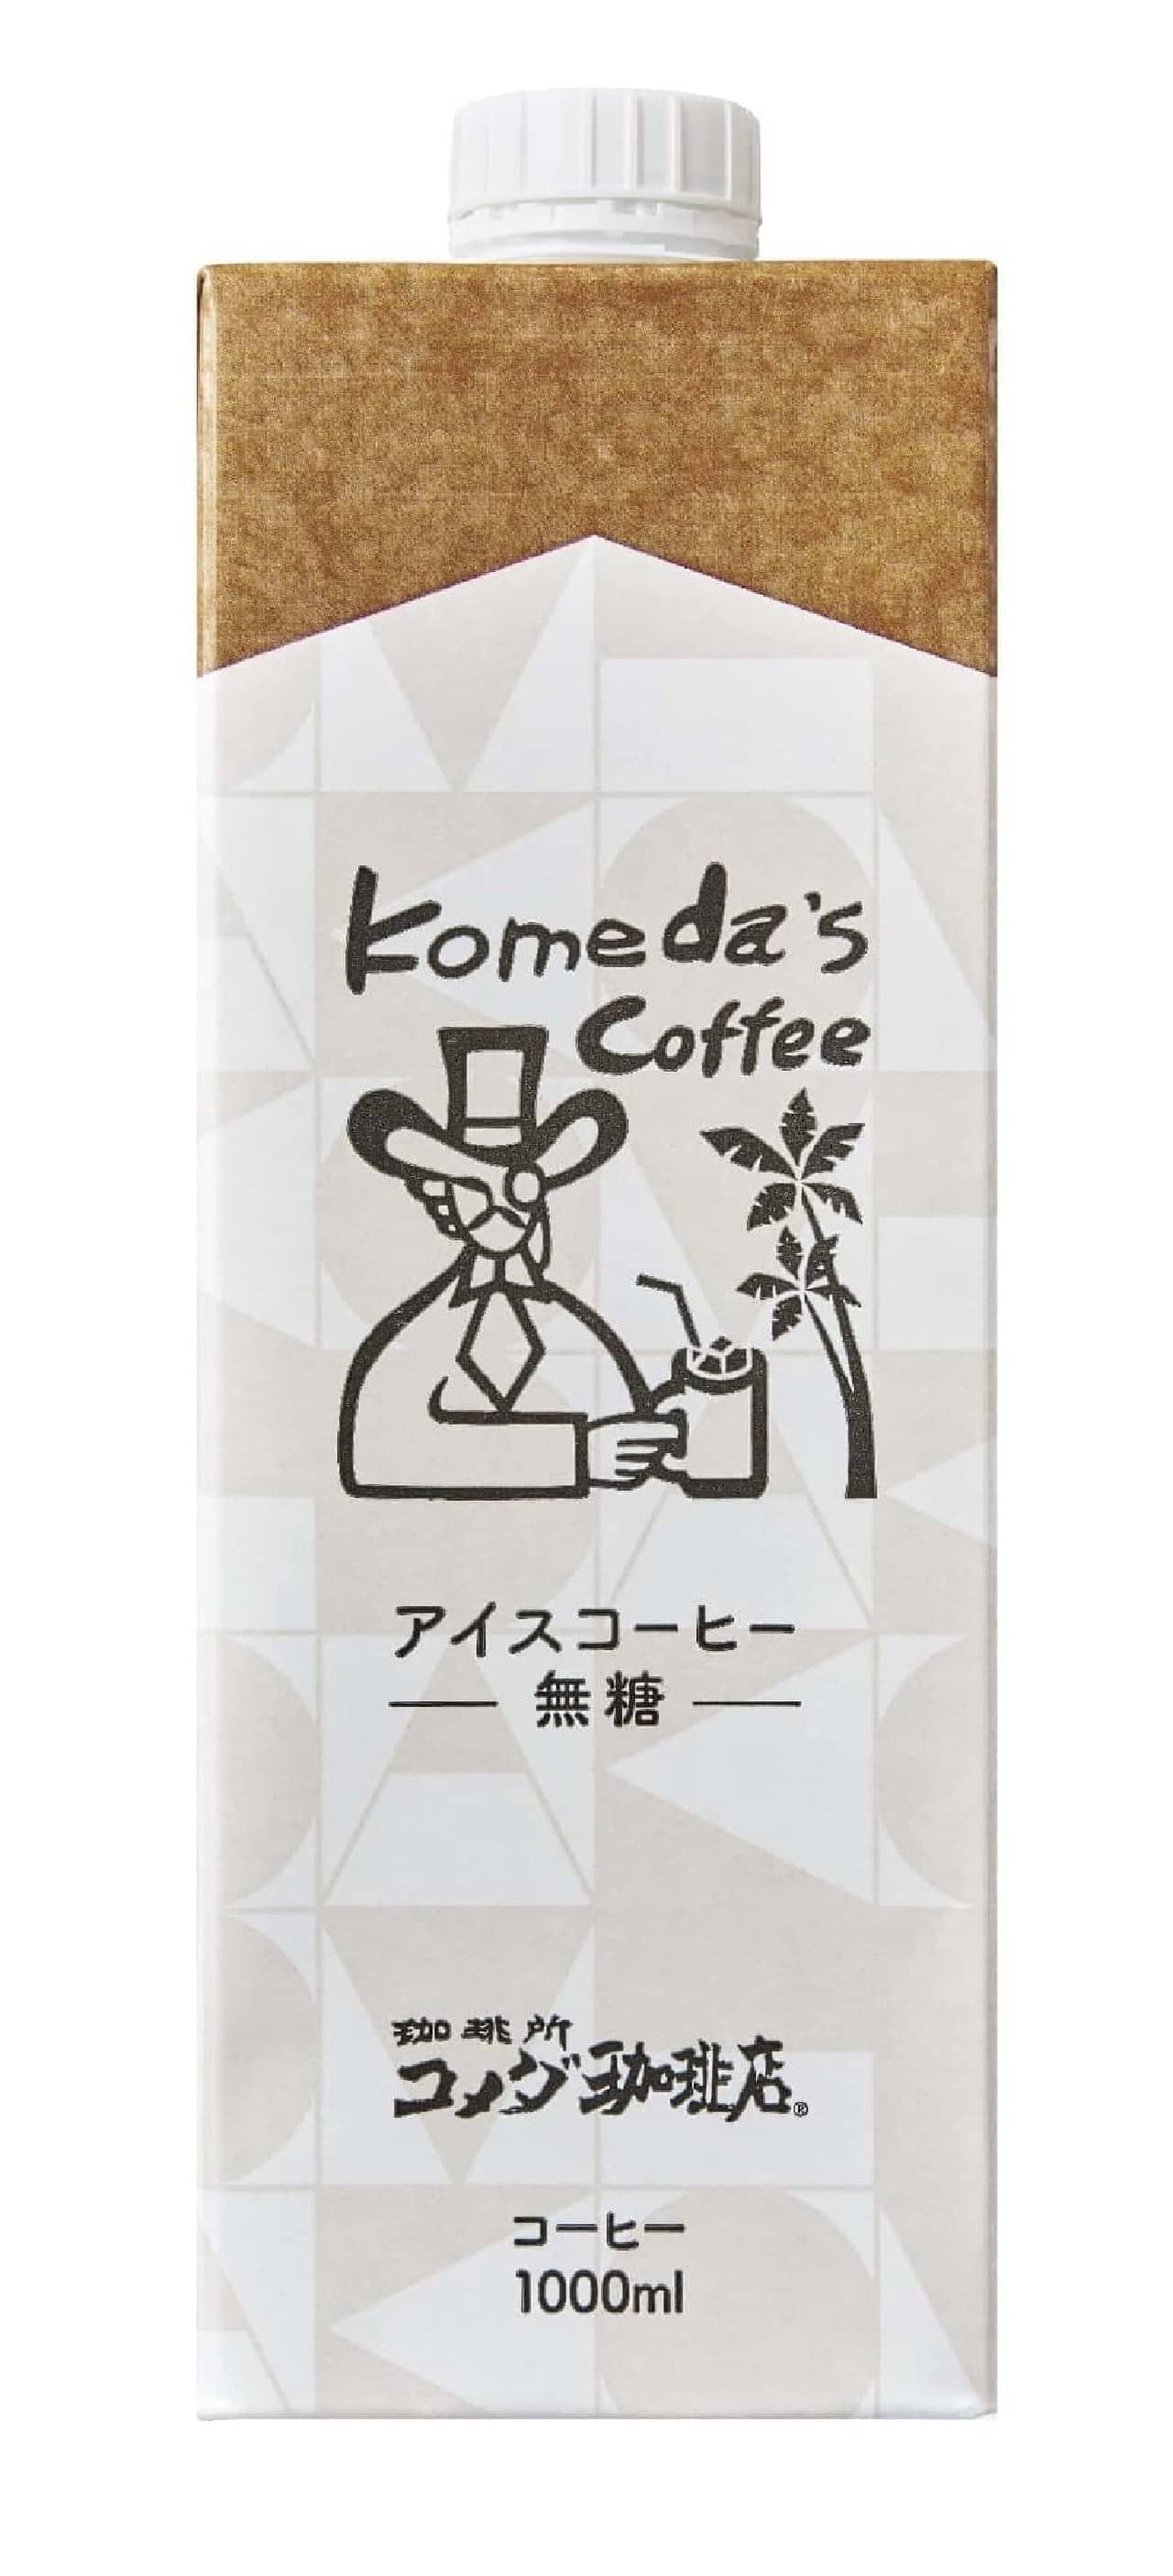 Komeda coffee shop "Summer bag 2021" Tote bag, coffee ticket, etc. set